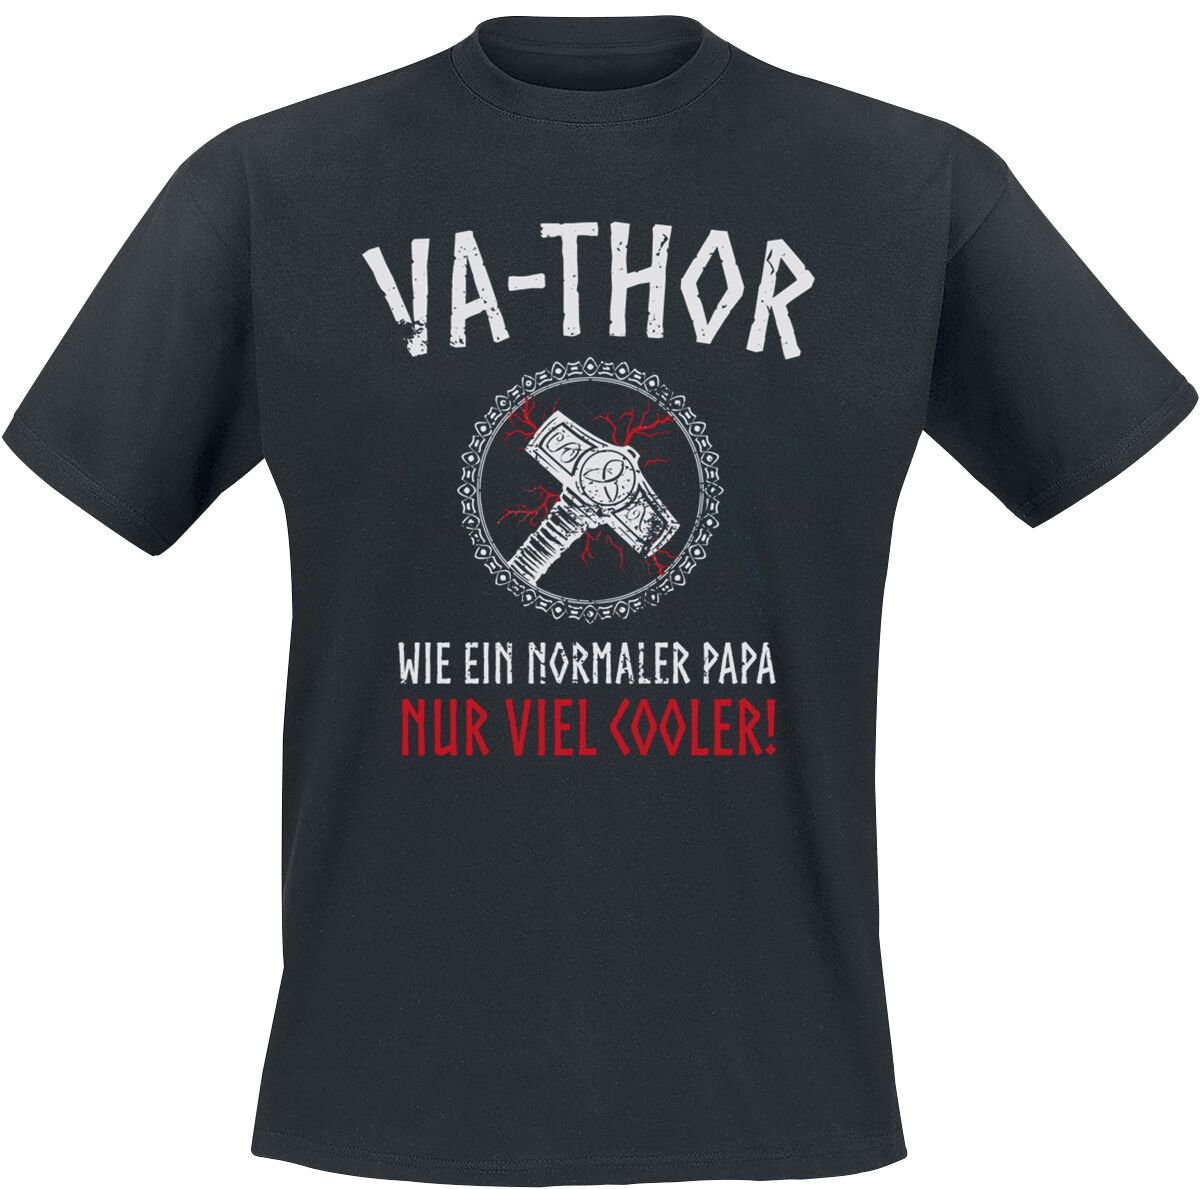 Familie & Freunde Va-Thor T-Shirt schwarz in XXL